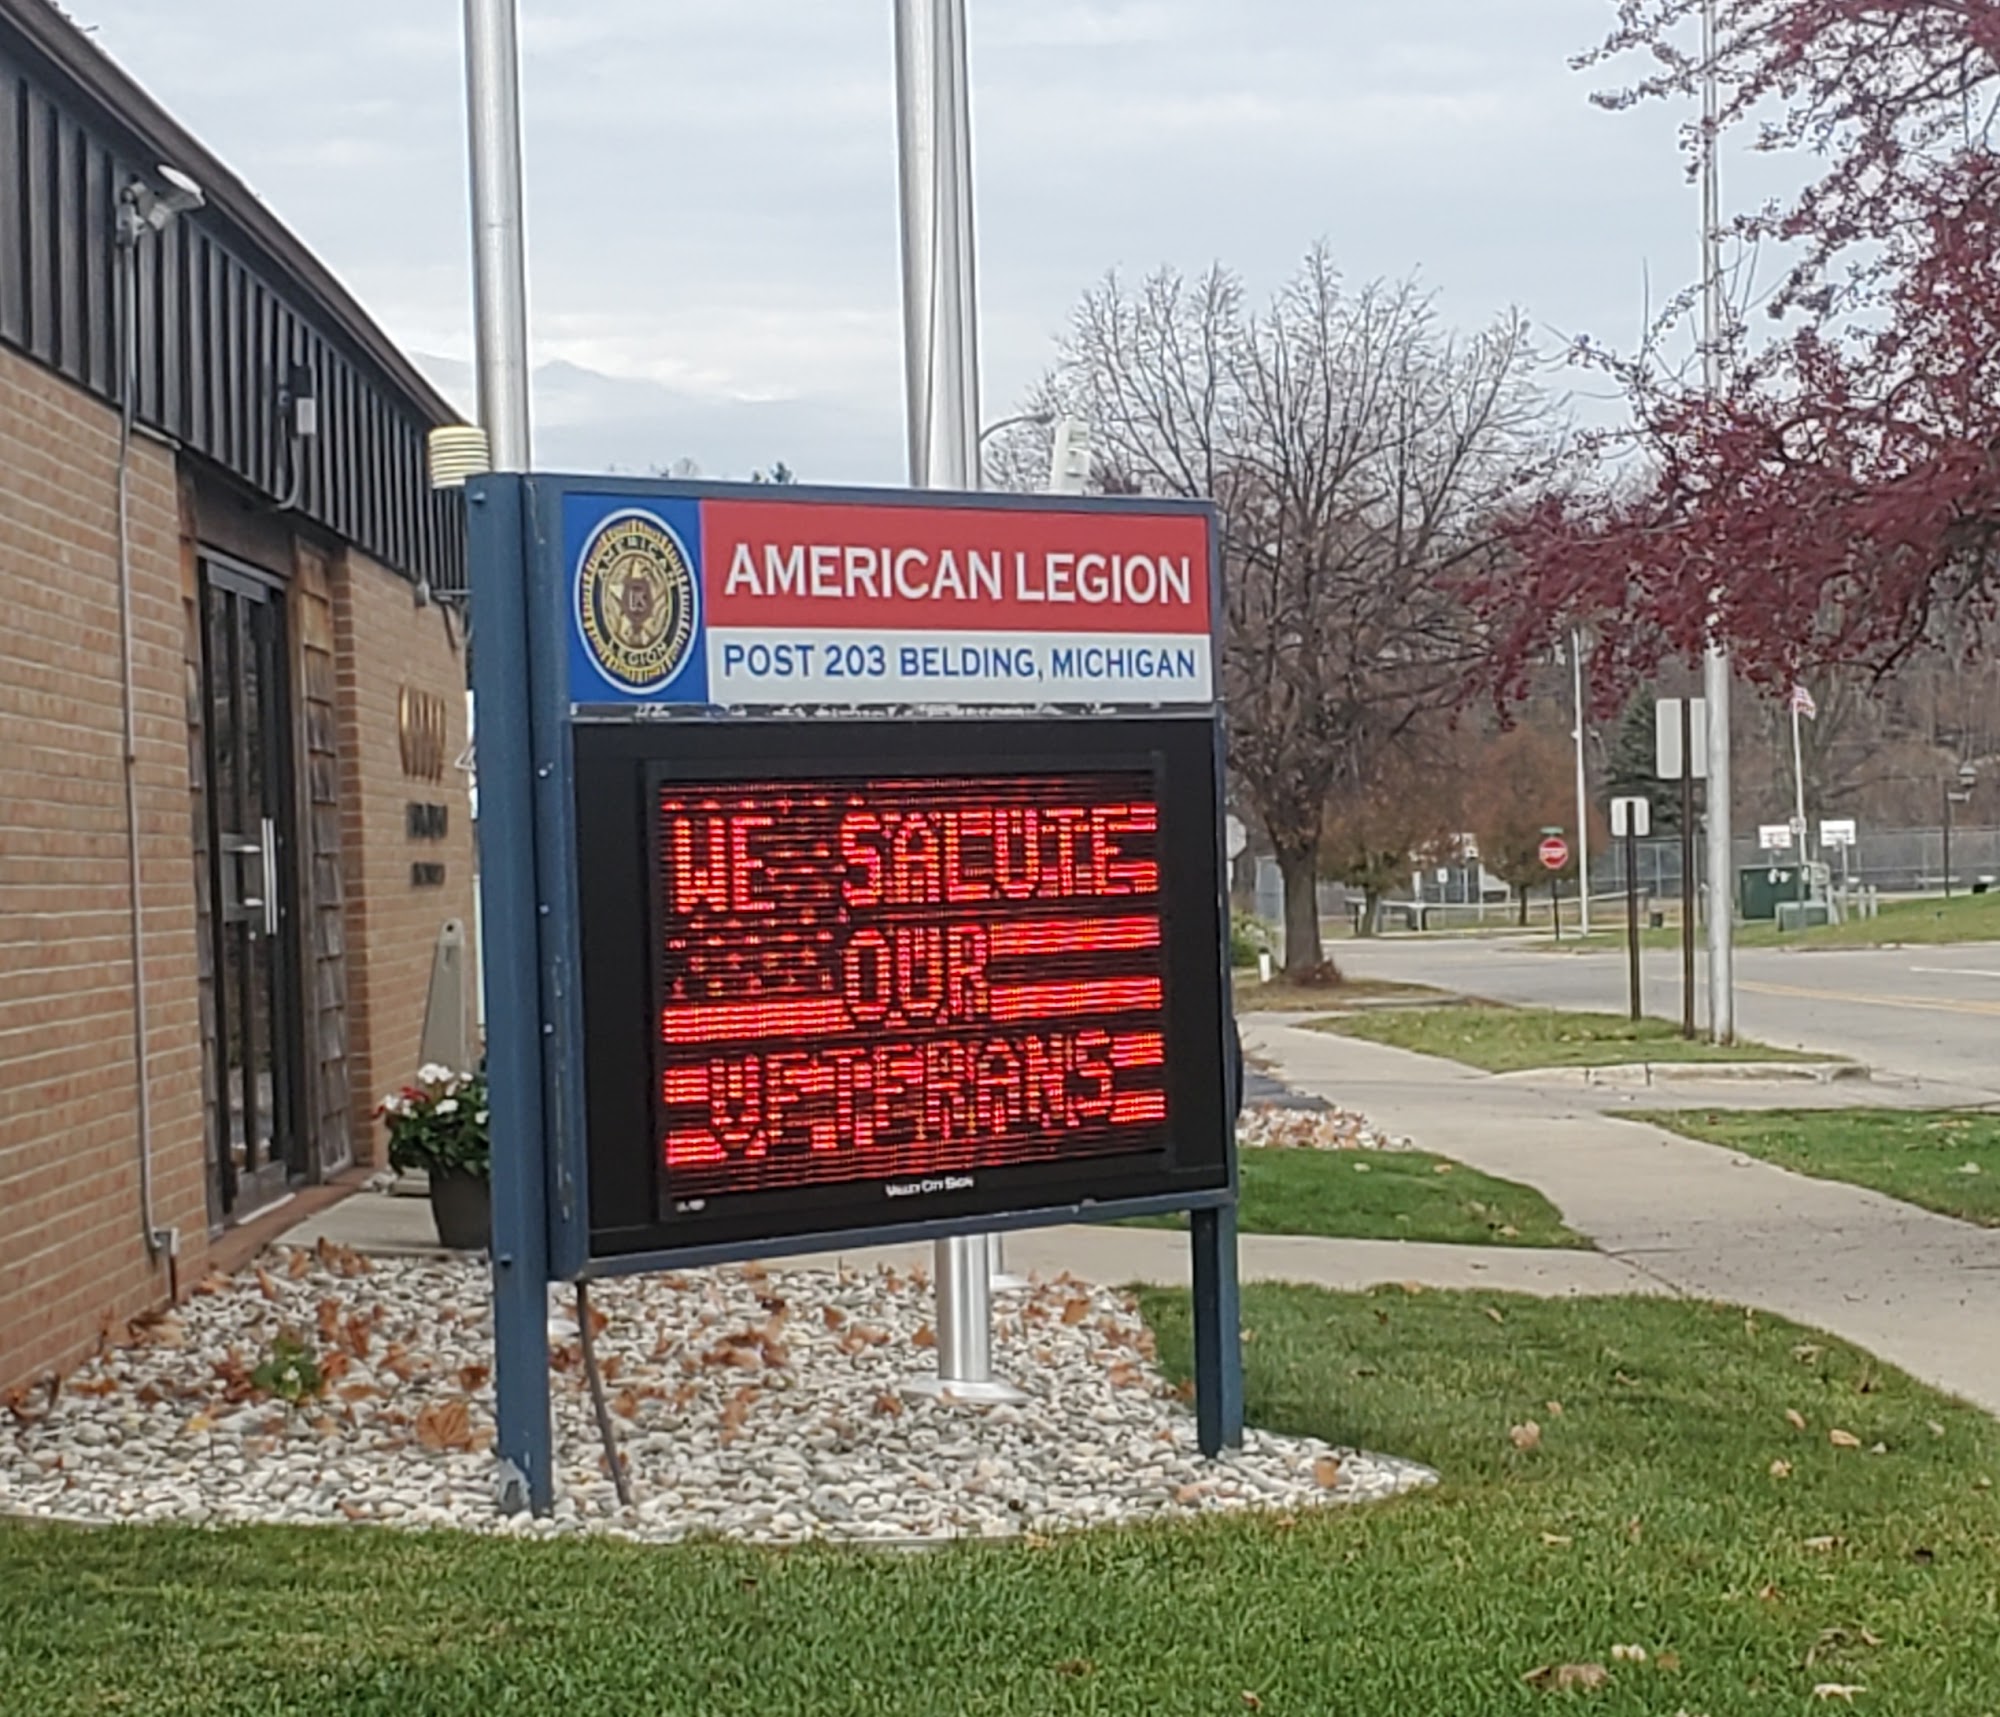 American Legion 121 S Broas St, Belding Michigan 48809